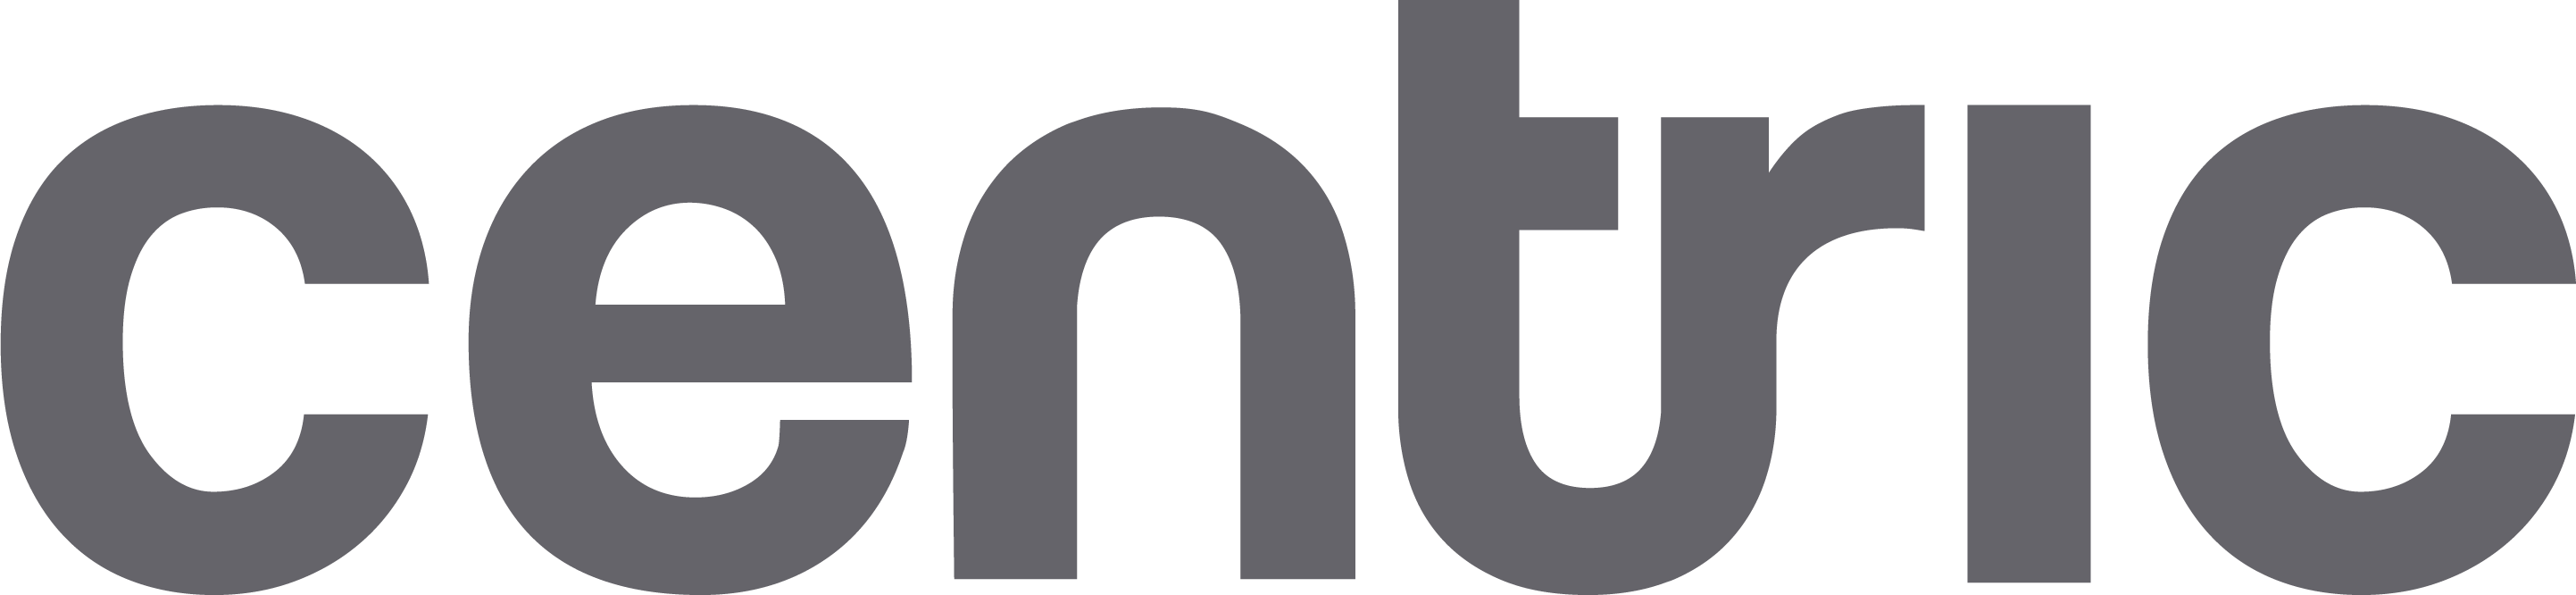 Centric-logo